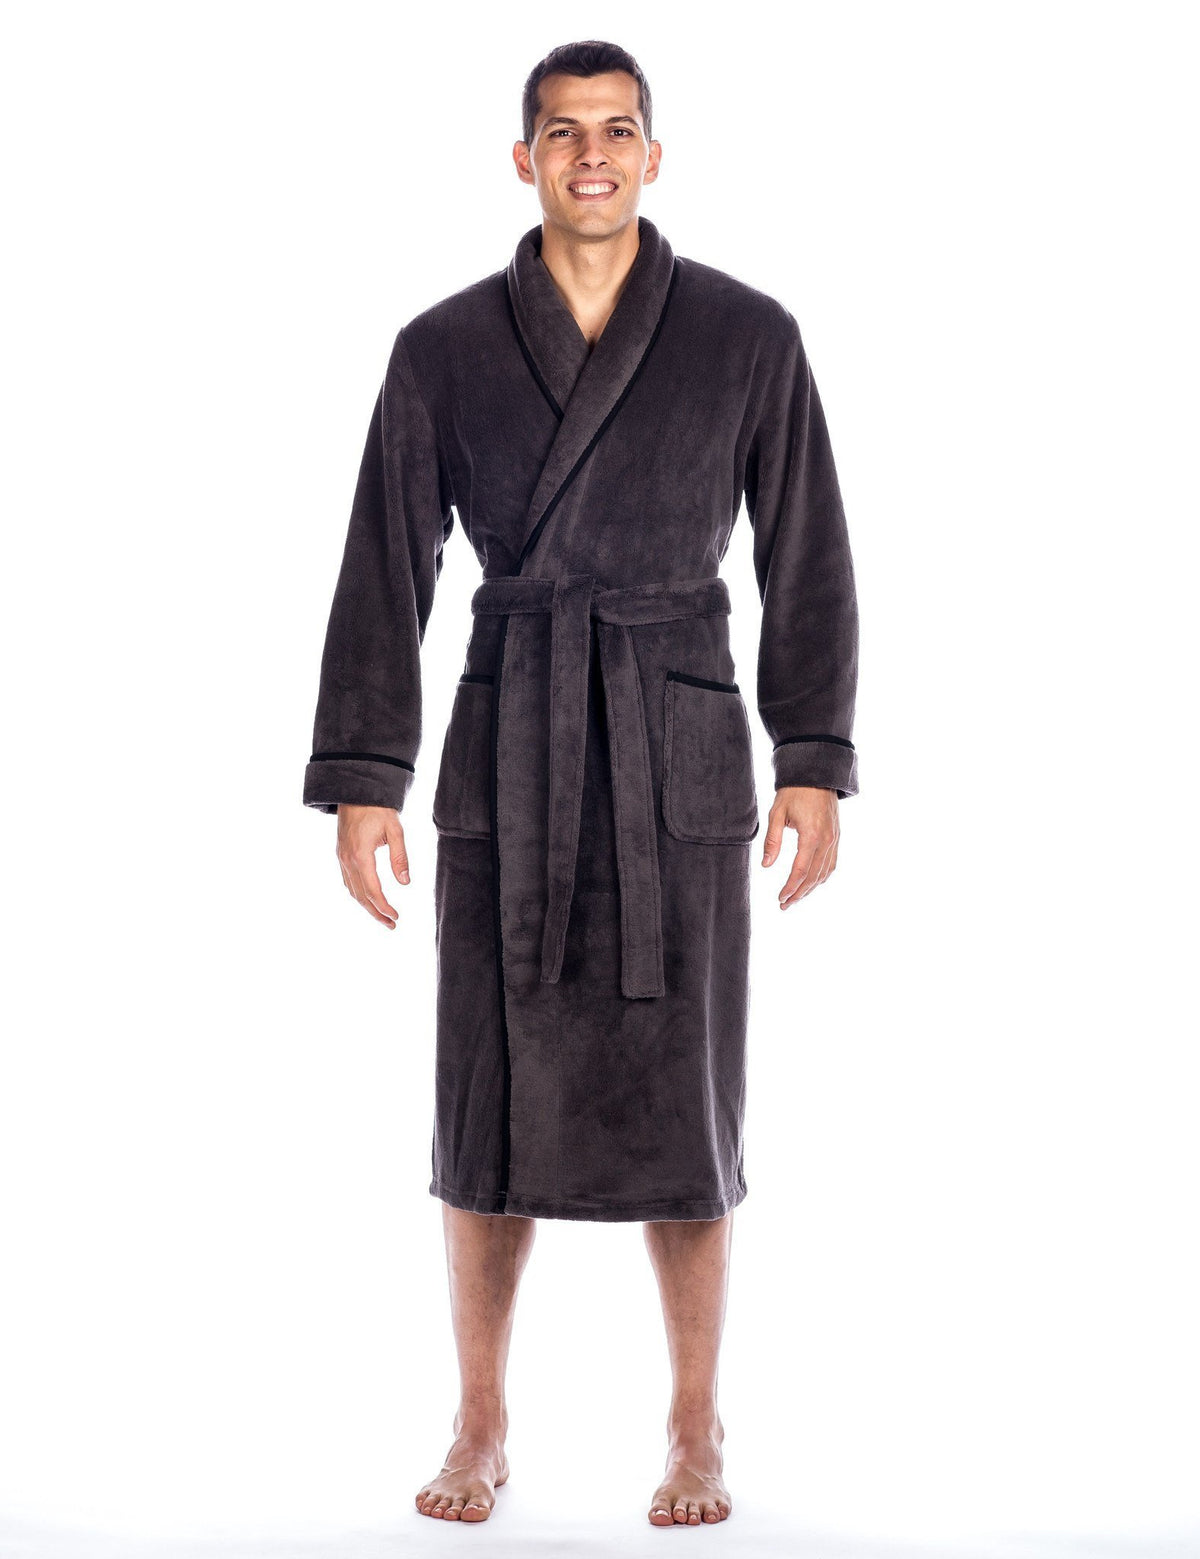 Men's Premium Coral Fleece Plush Spa/Bath Robe - Dark Gray